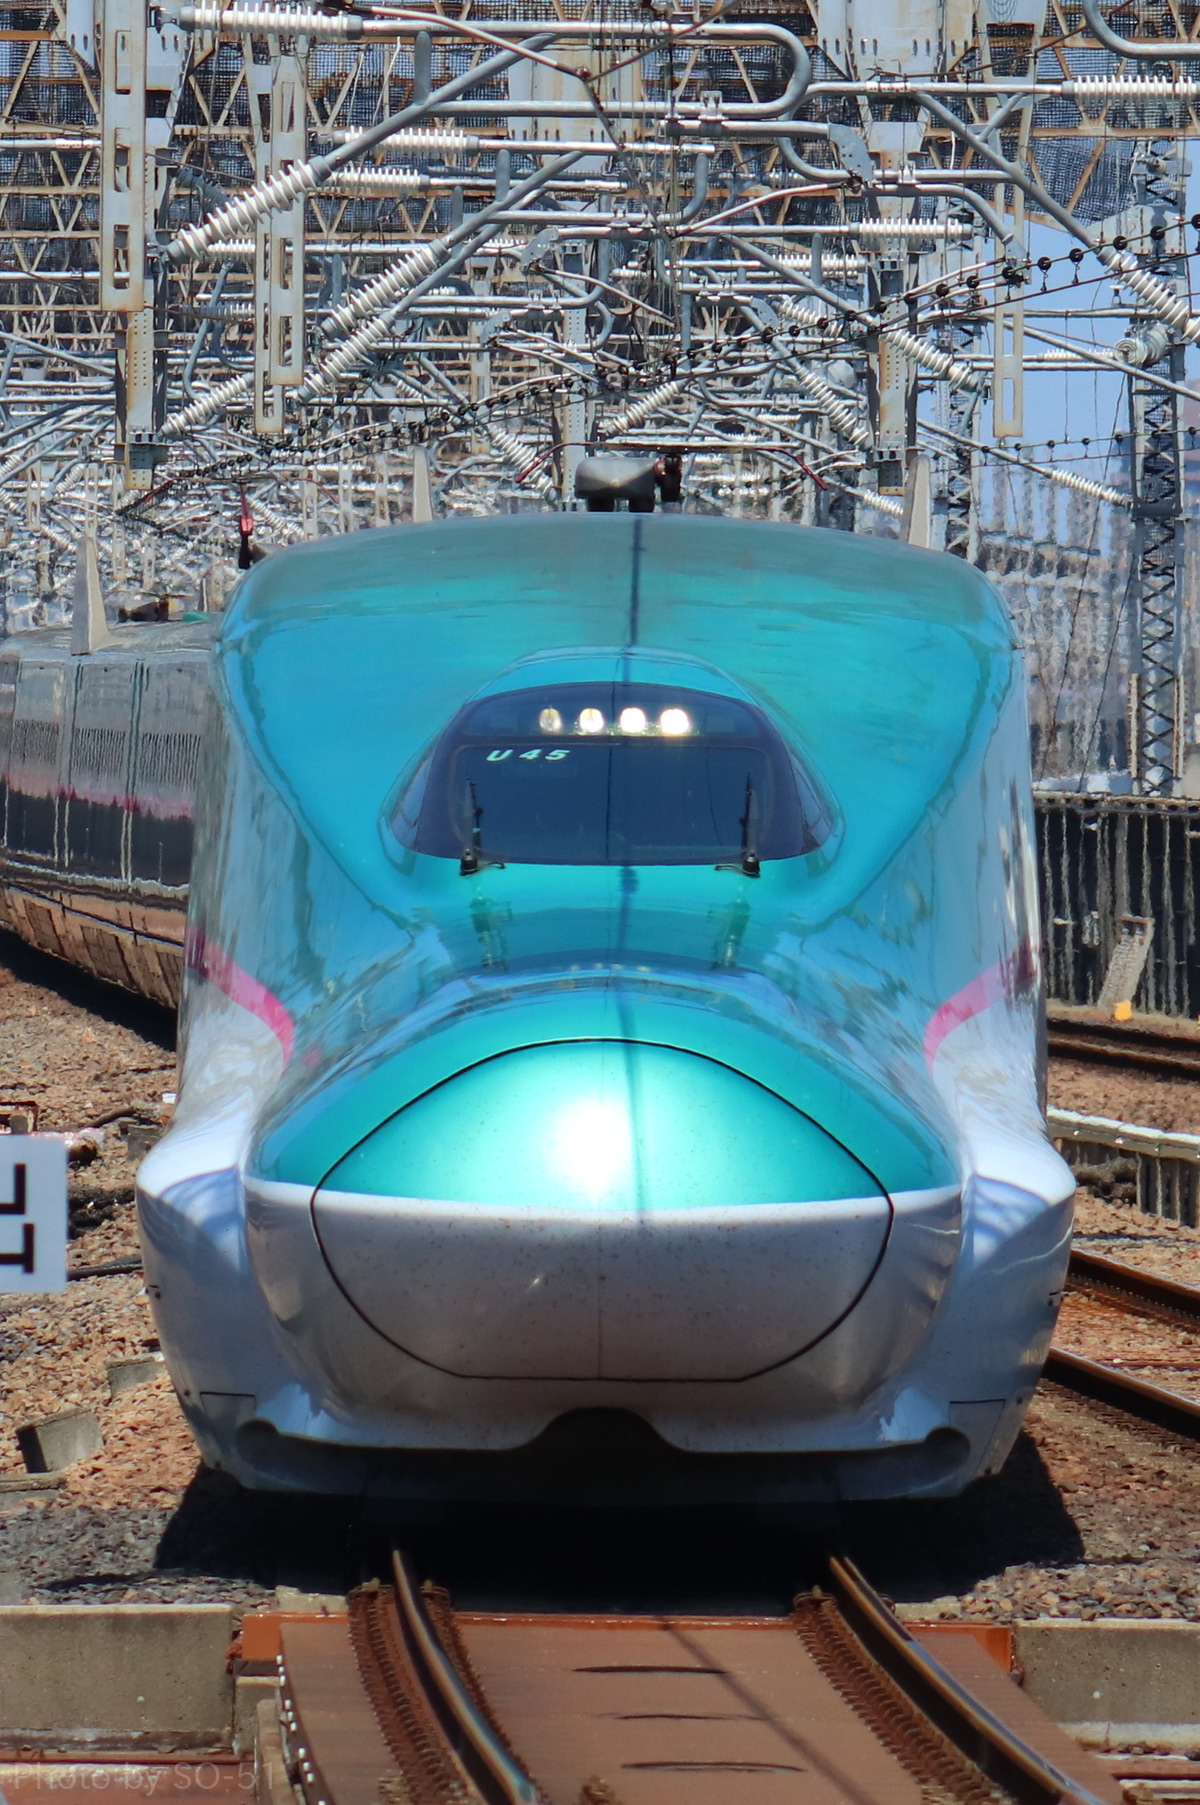 JR東日本 新幹線総合車両センター E5系 U45編成